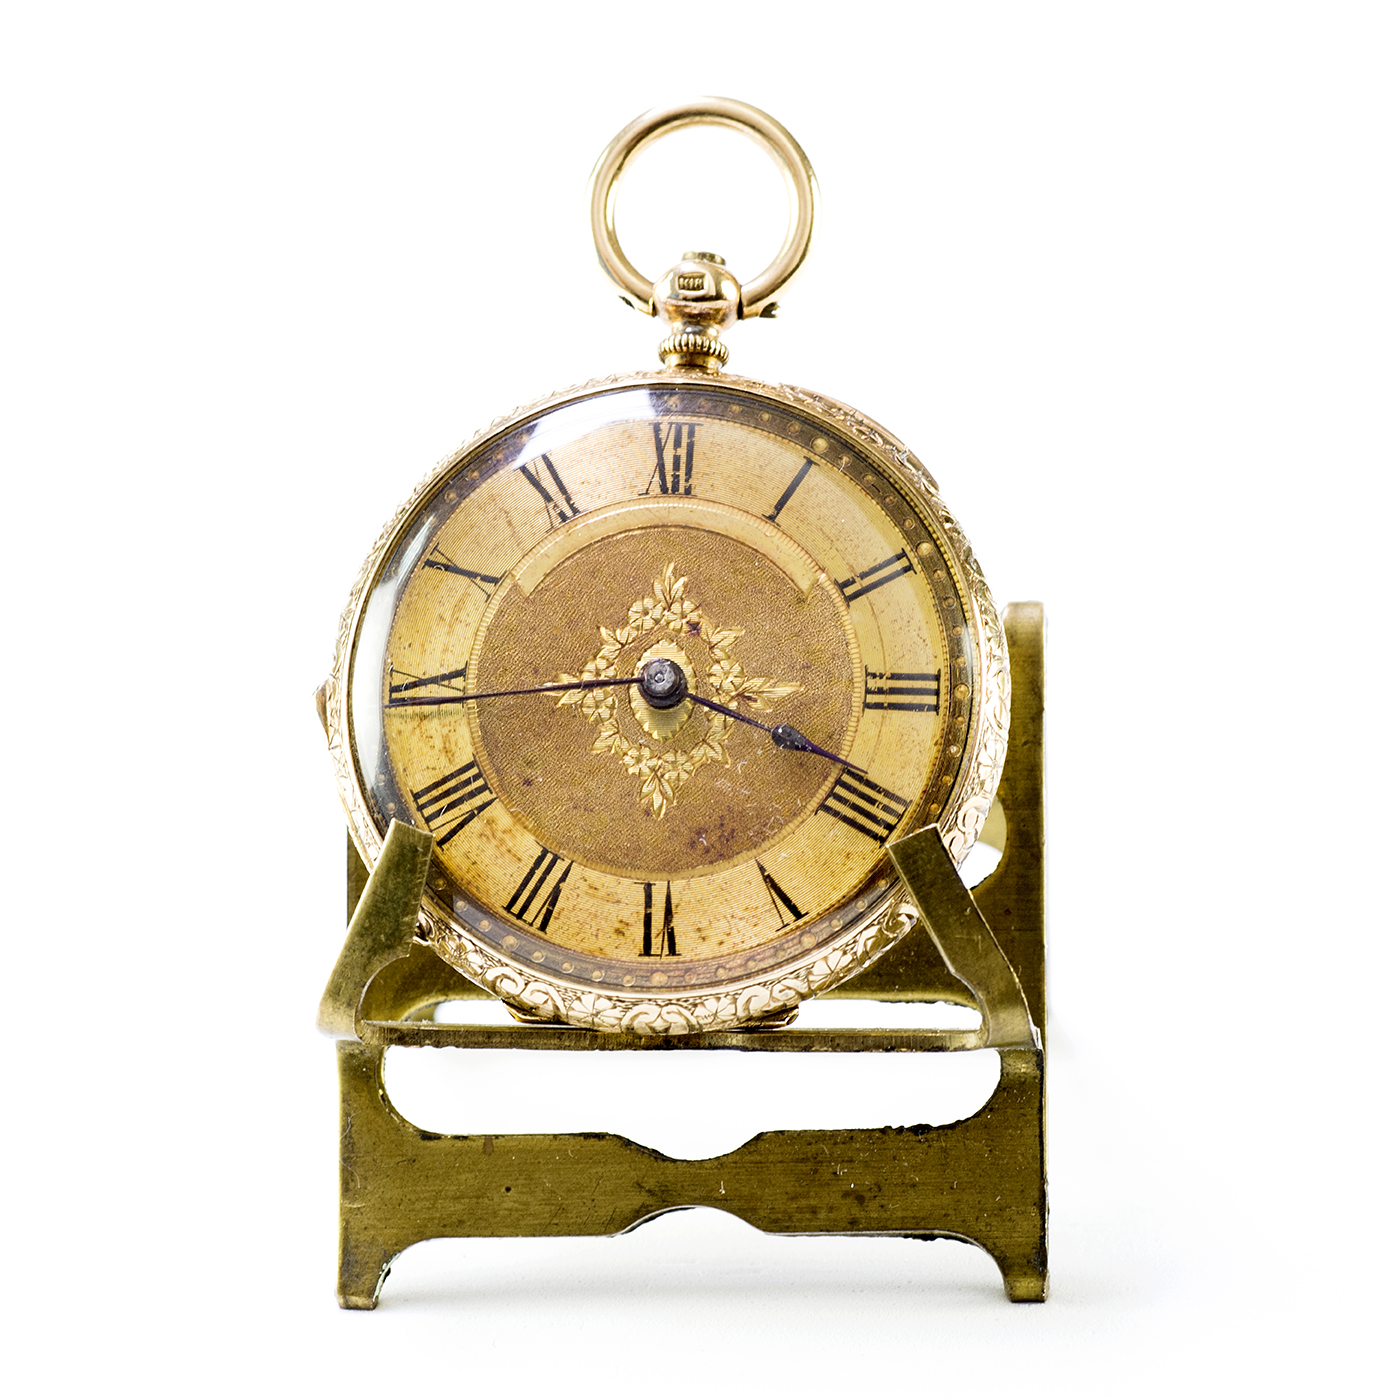 AUGUSTE ROBERT STAUFFER & FILS (ARS & F). Hang watch, lepine. Switzerland, Ca. 1880.